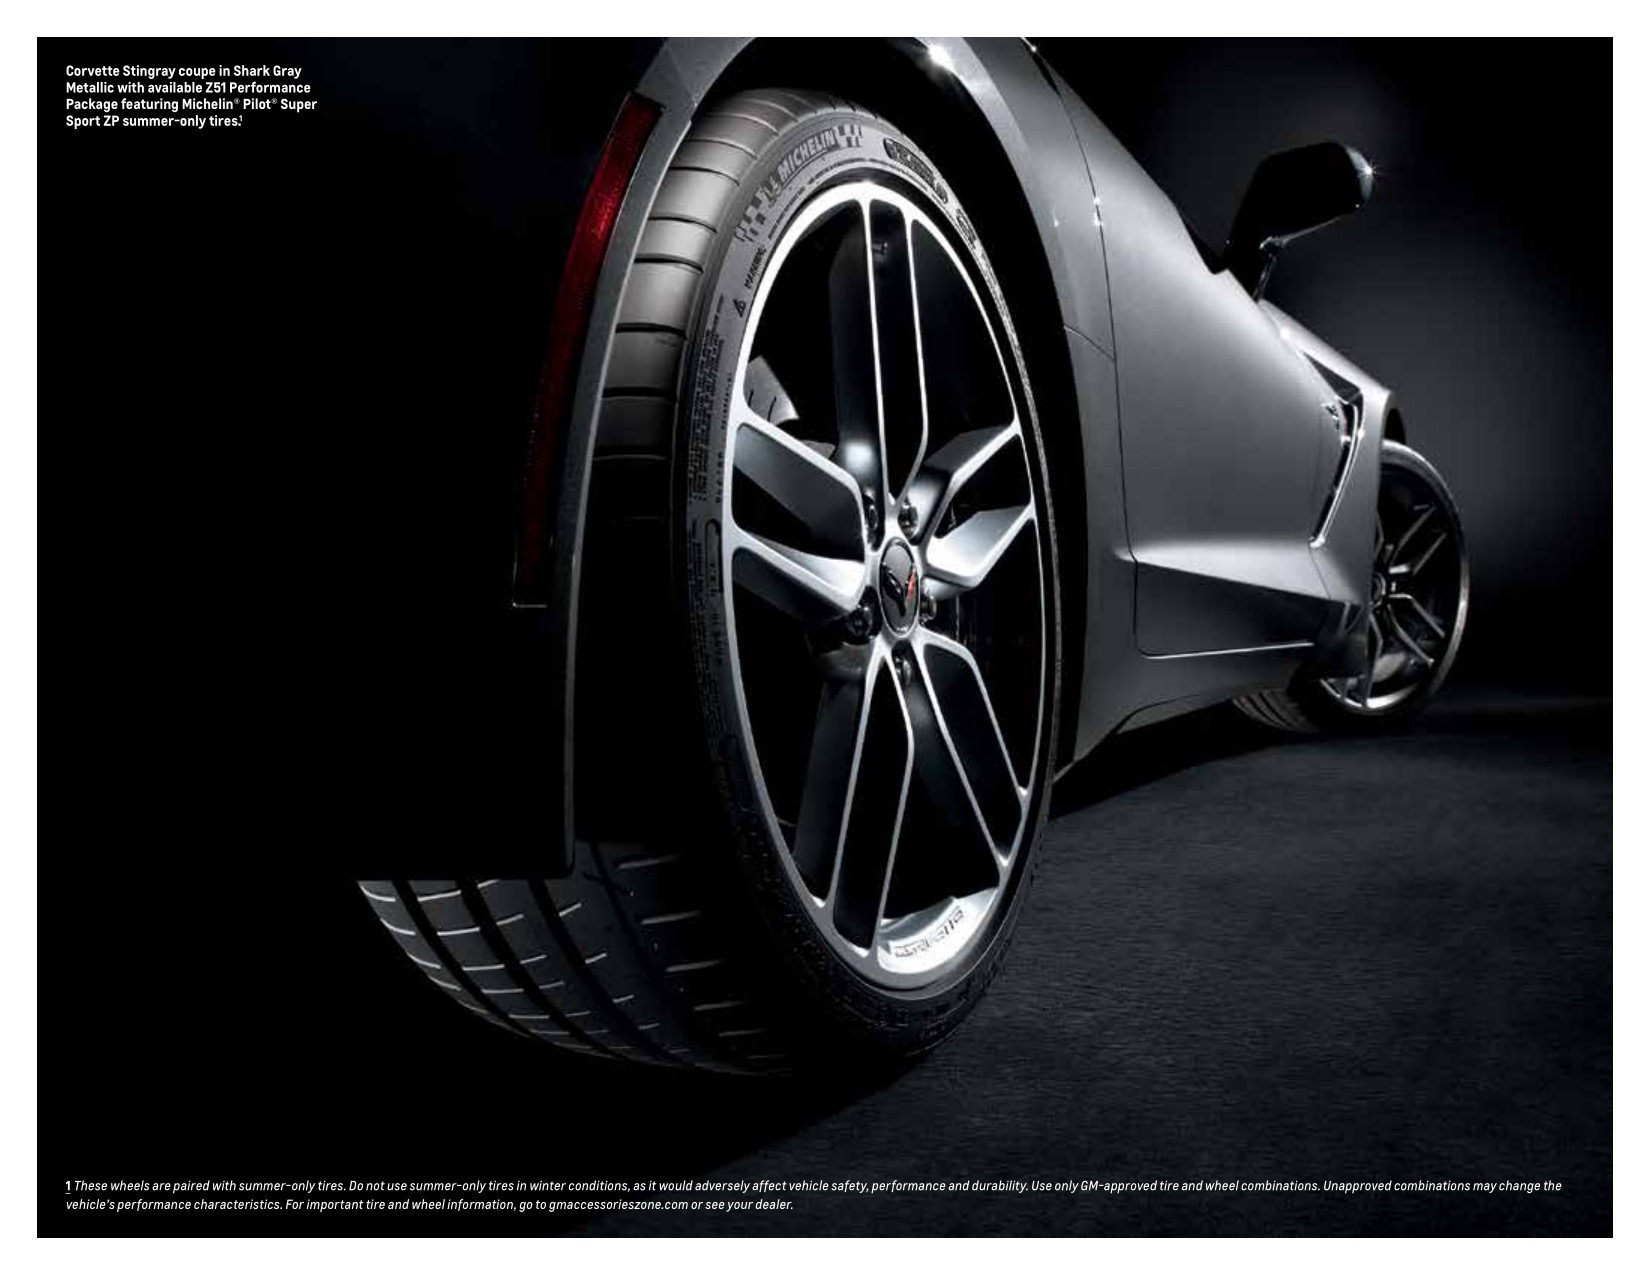 2015 Corvette Brochure Page 12